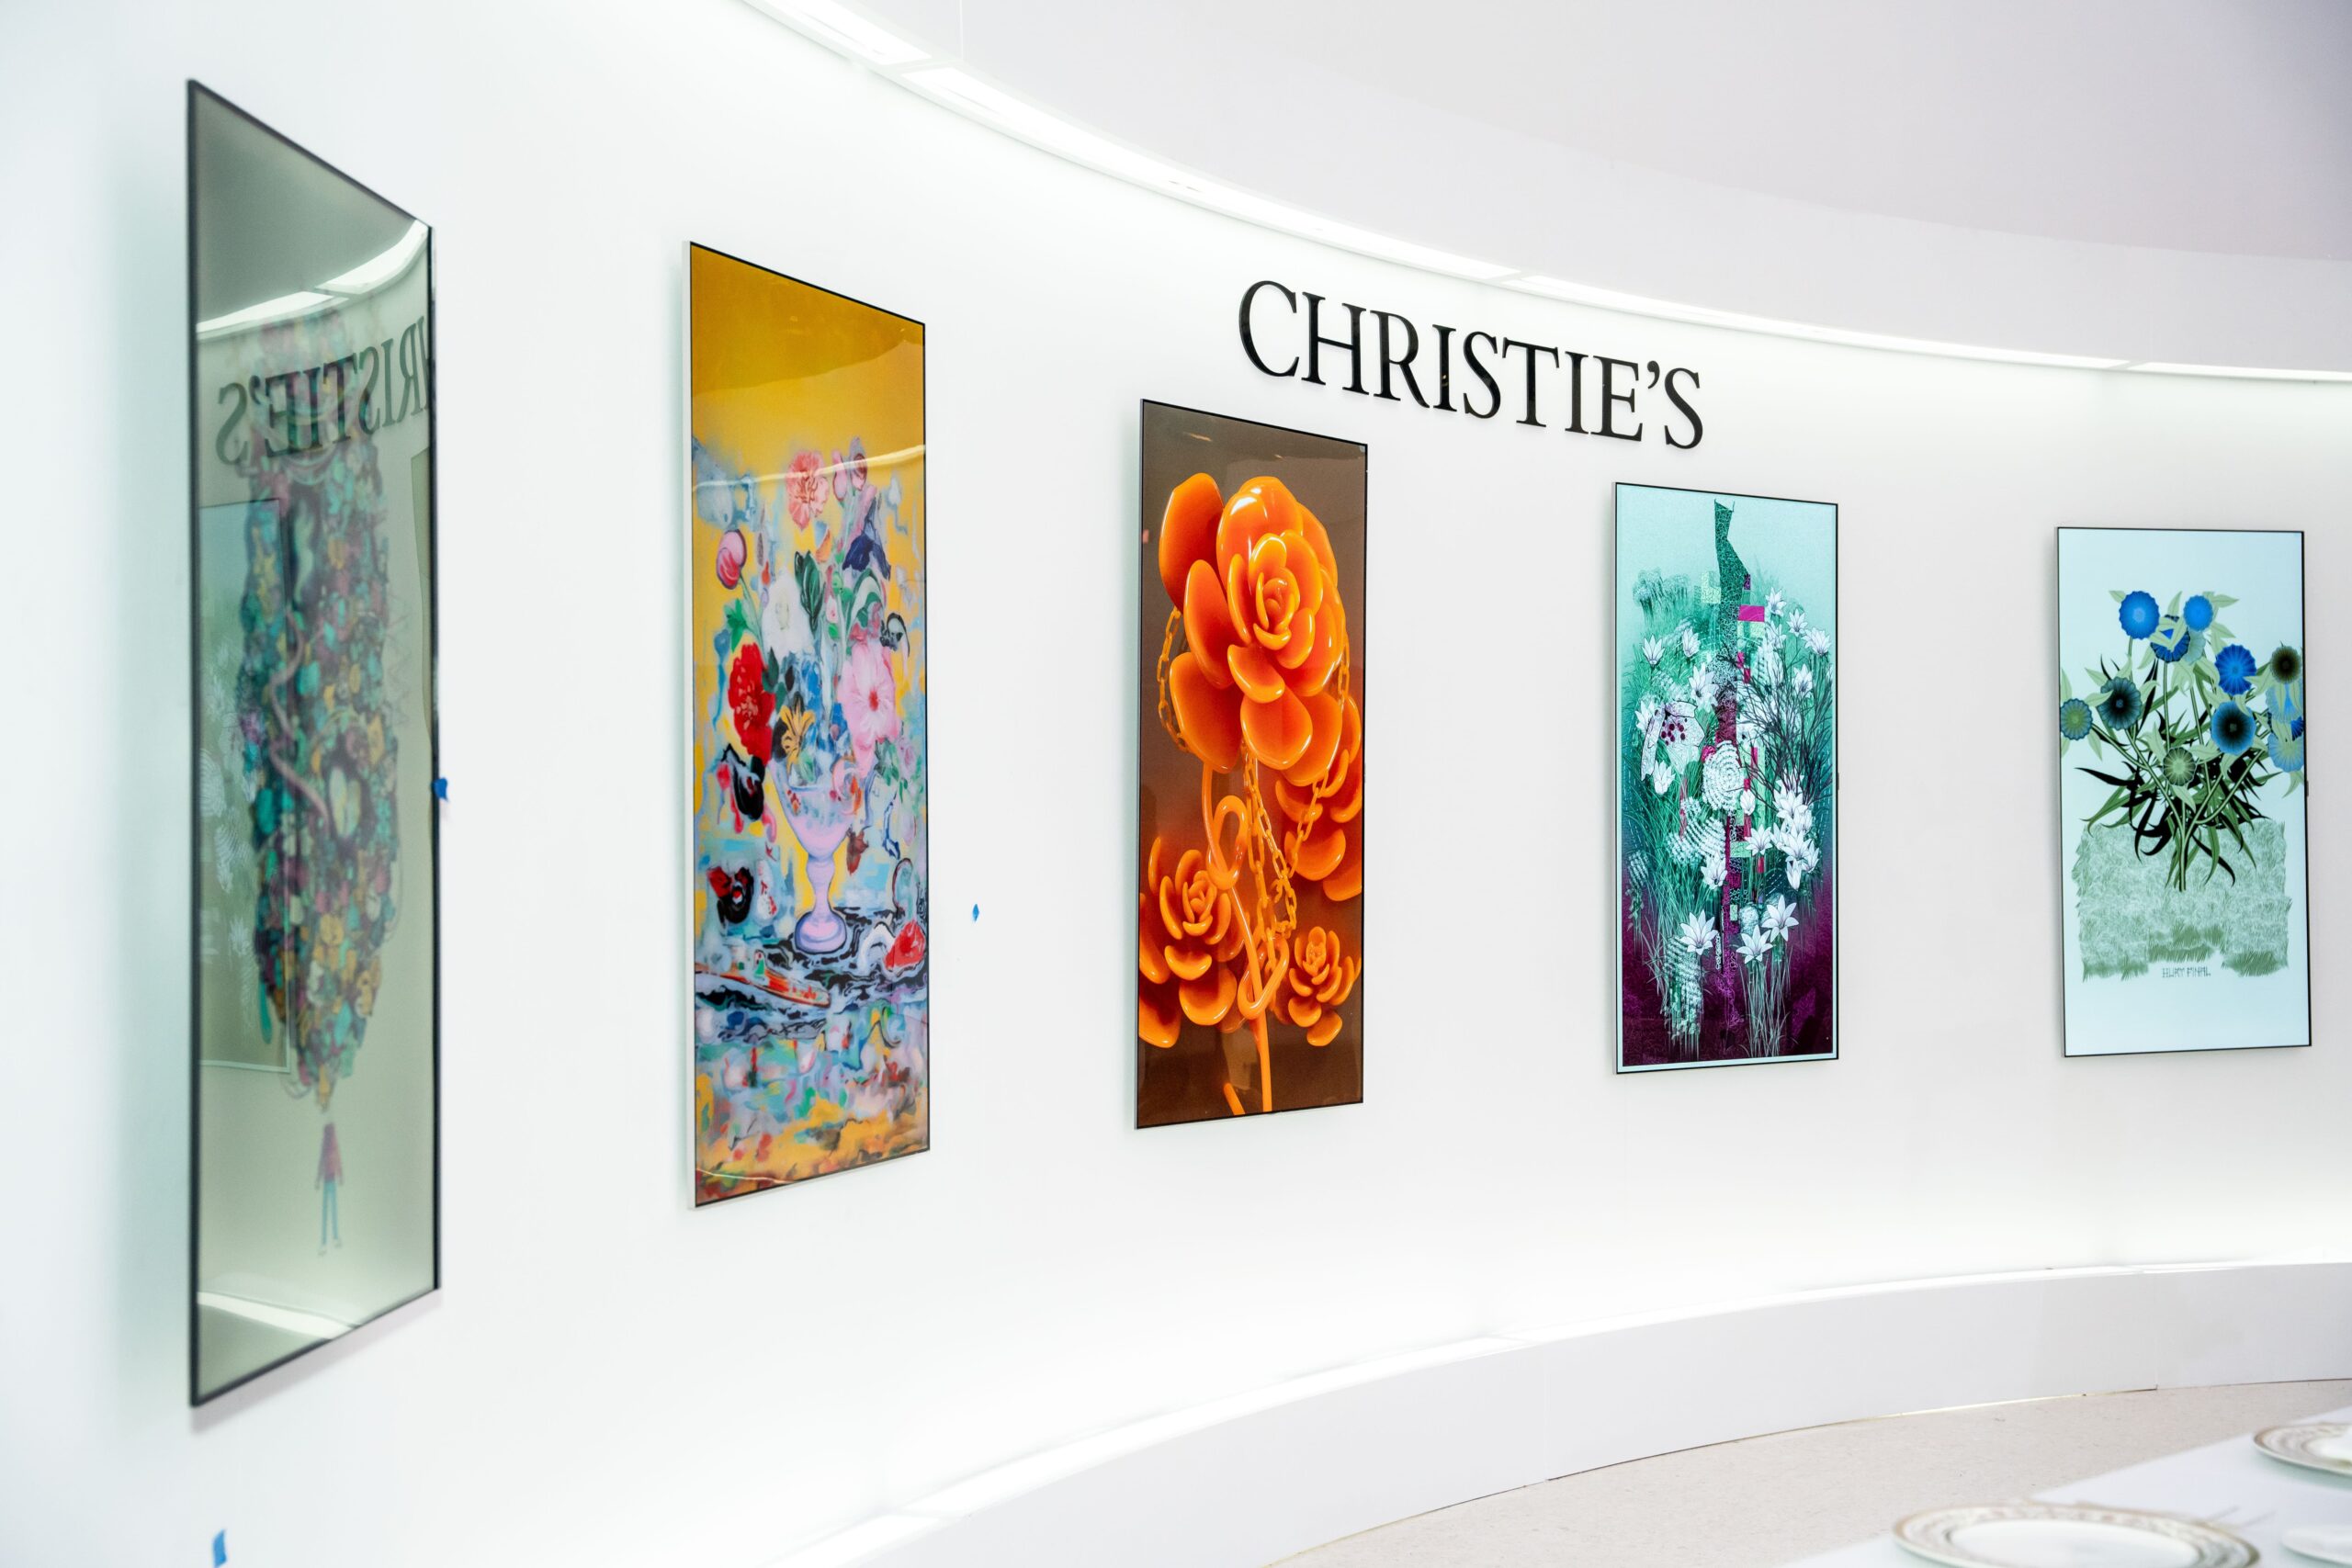 Christie's “Miami Edit” Auction Closes at $230K+ After Gateway Miami Exhibition